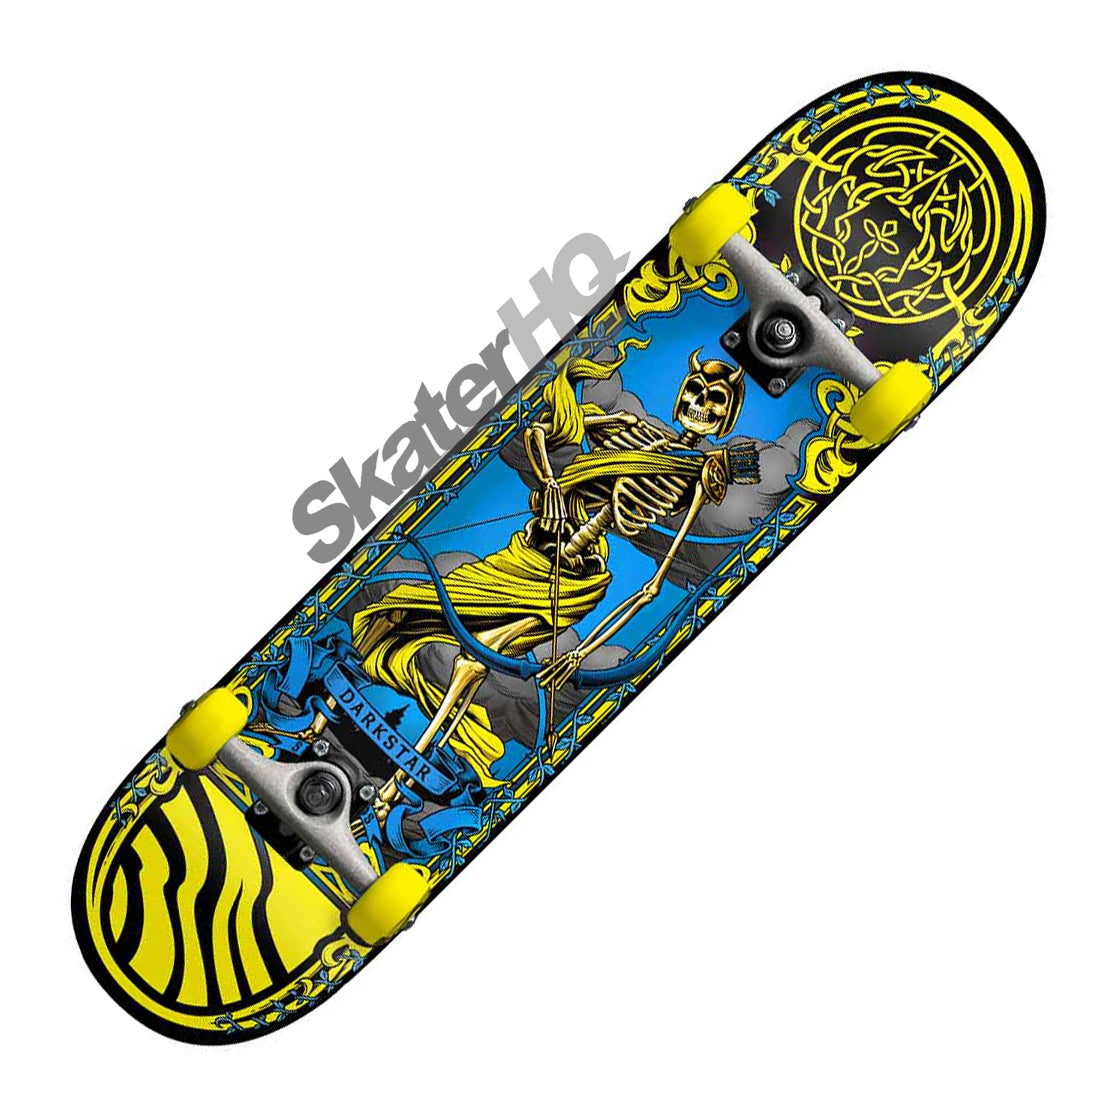 Darkstar Arrow FP 7.5 Complete - Yellow Skateboard Completes Modern Street